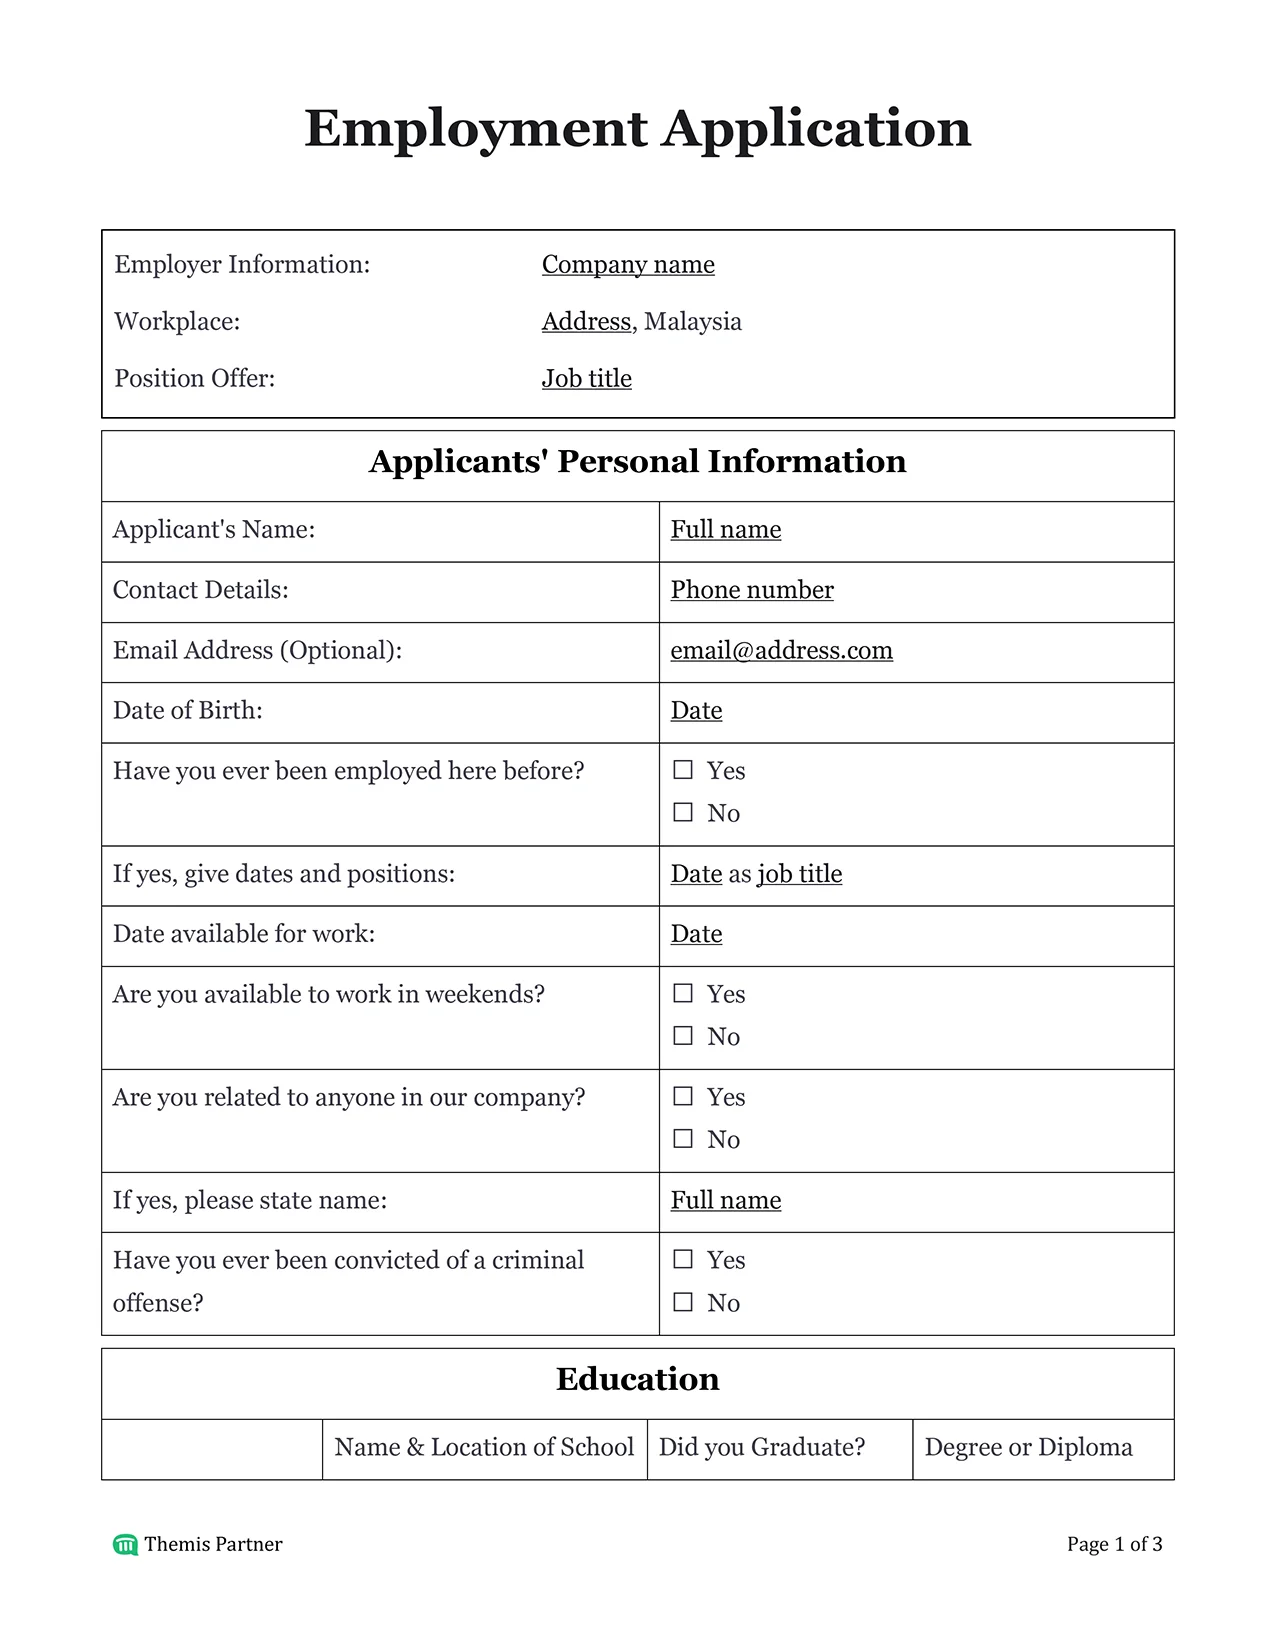 Employment application Malaysia 1